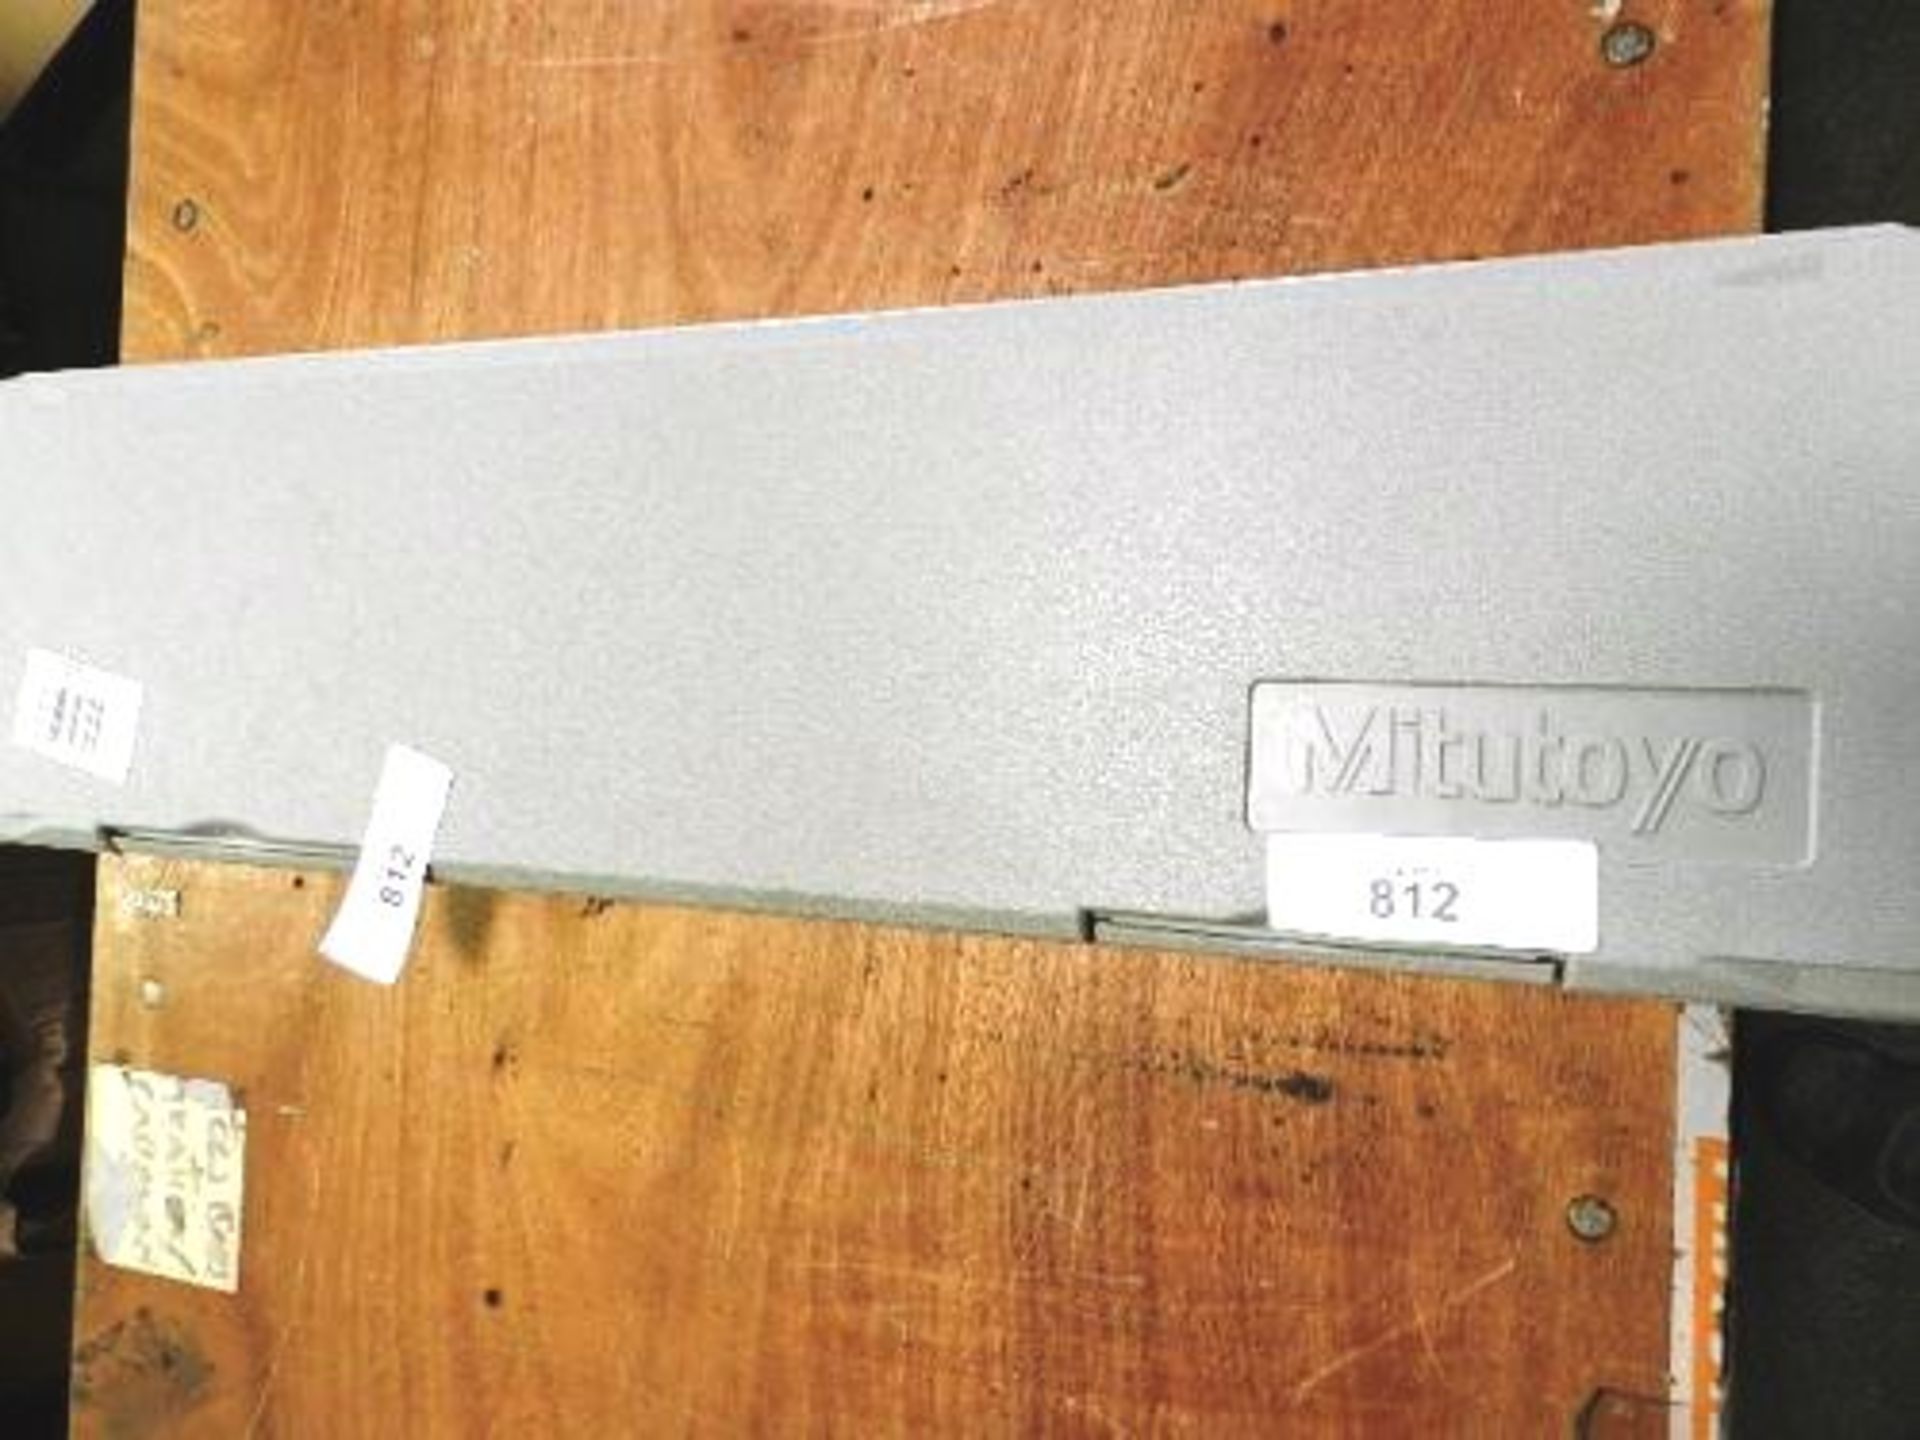 1 x Mitutoyo digital caliper, size 600mm - New in box (SW6) - Image 2 of 2